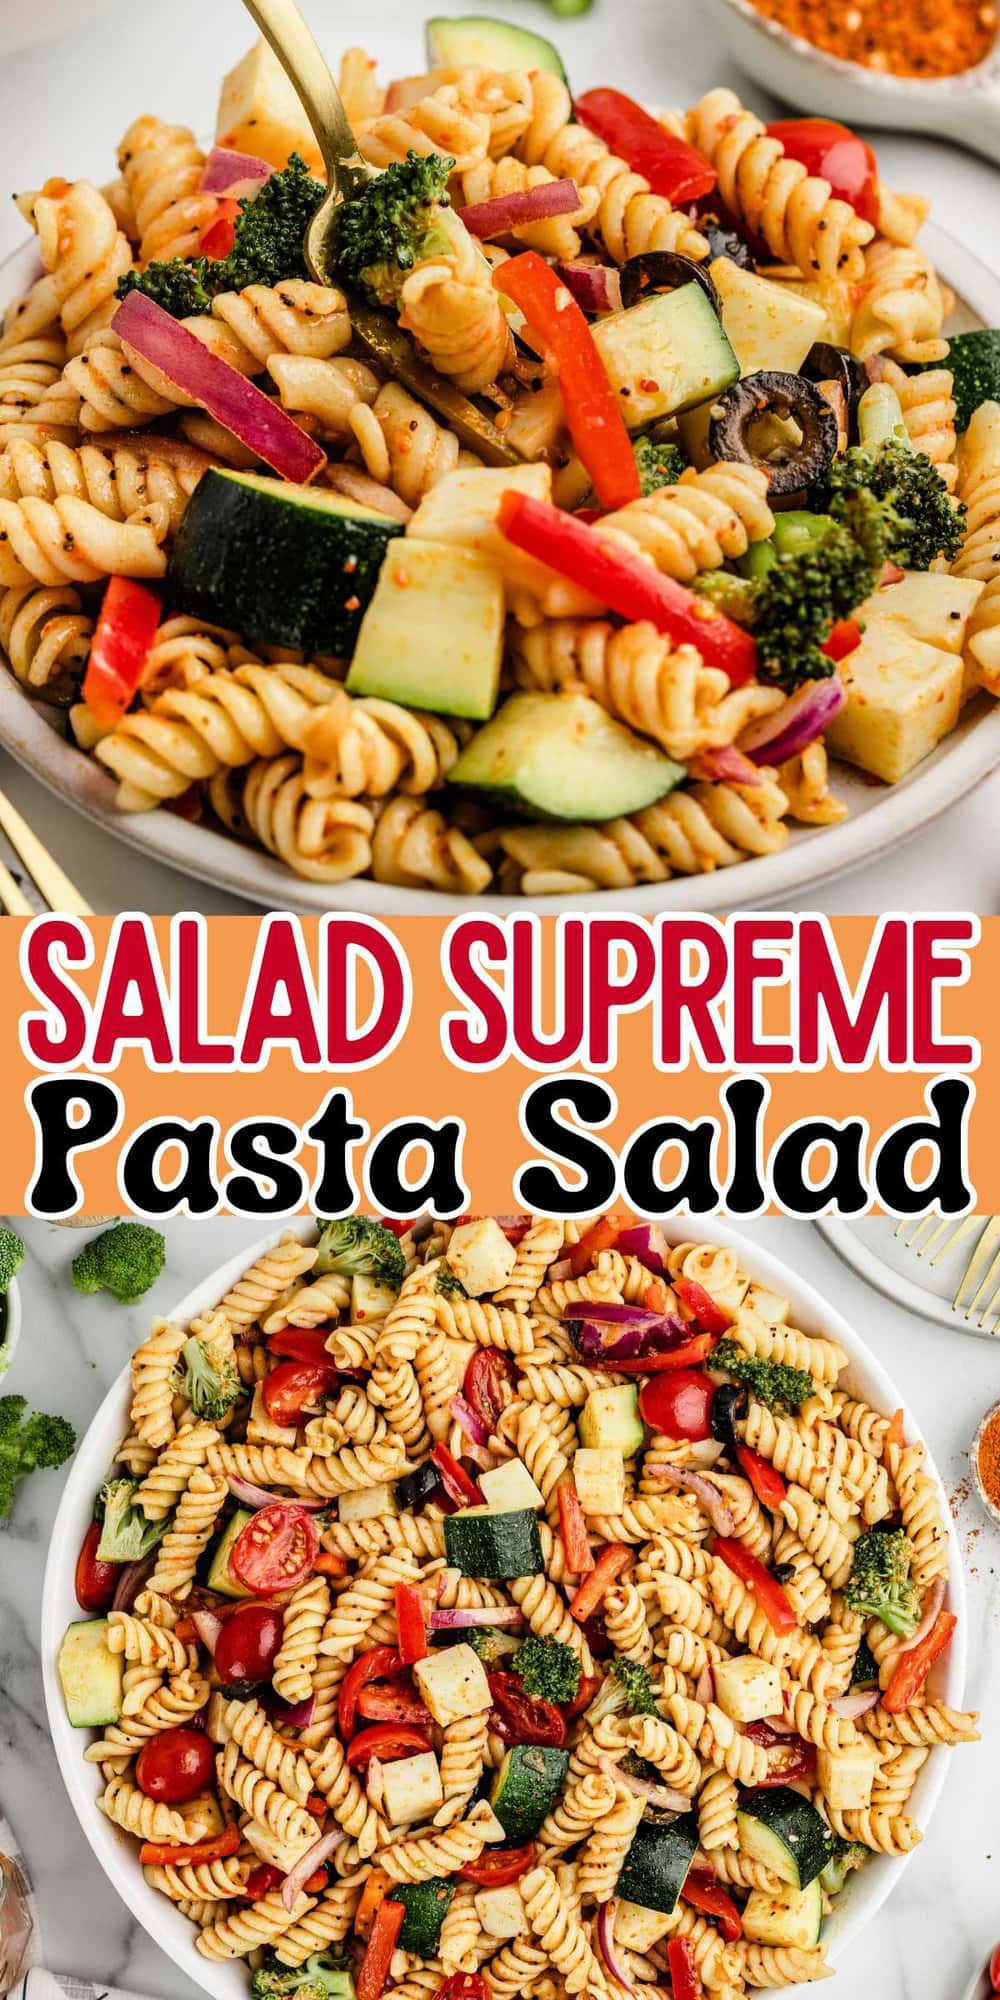 Salad Supreme Pasta Salad pinterest